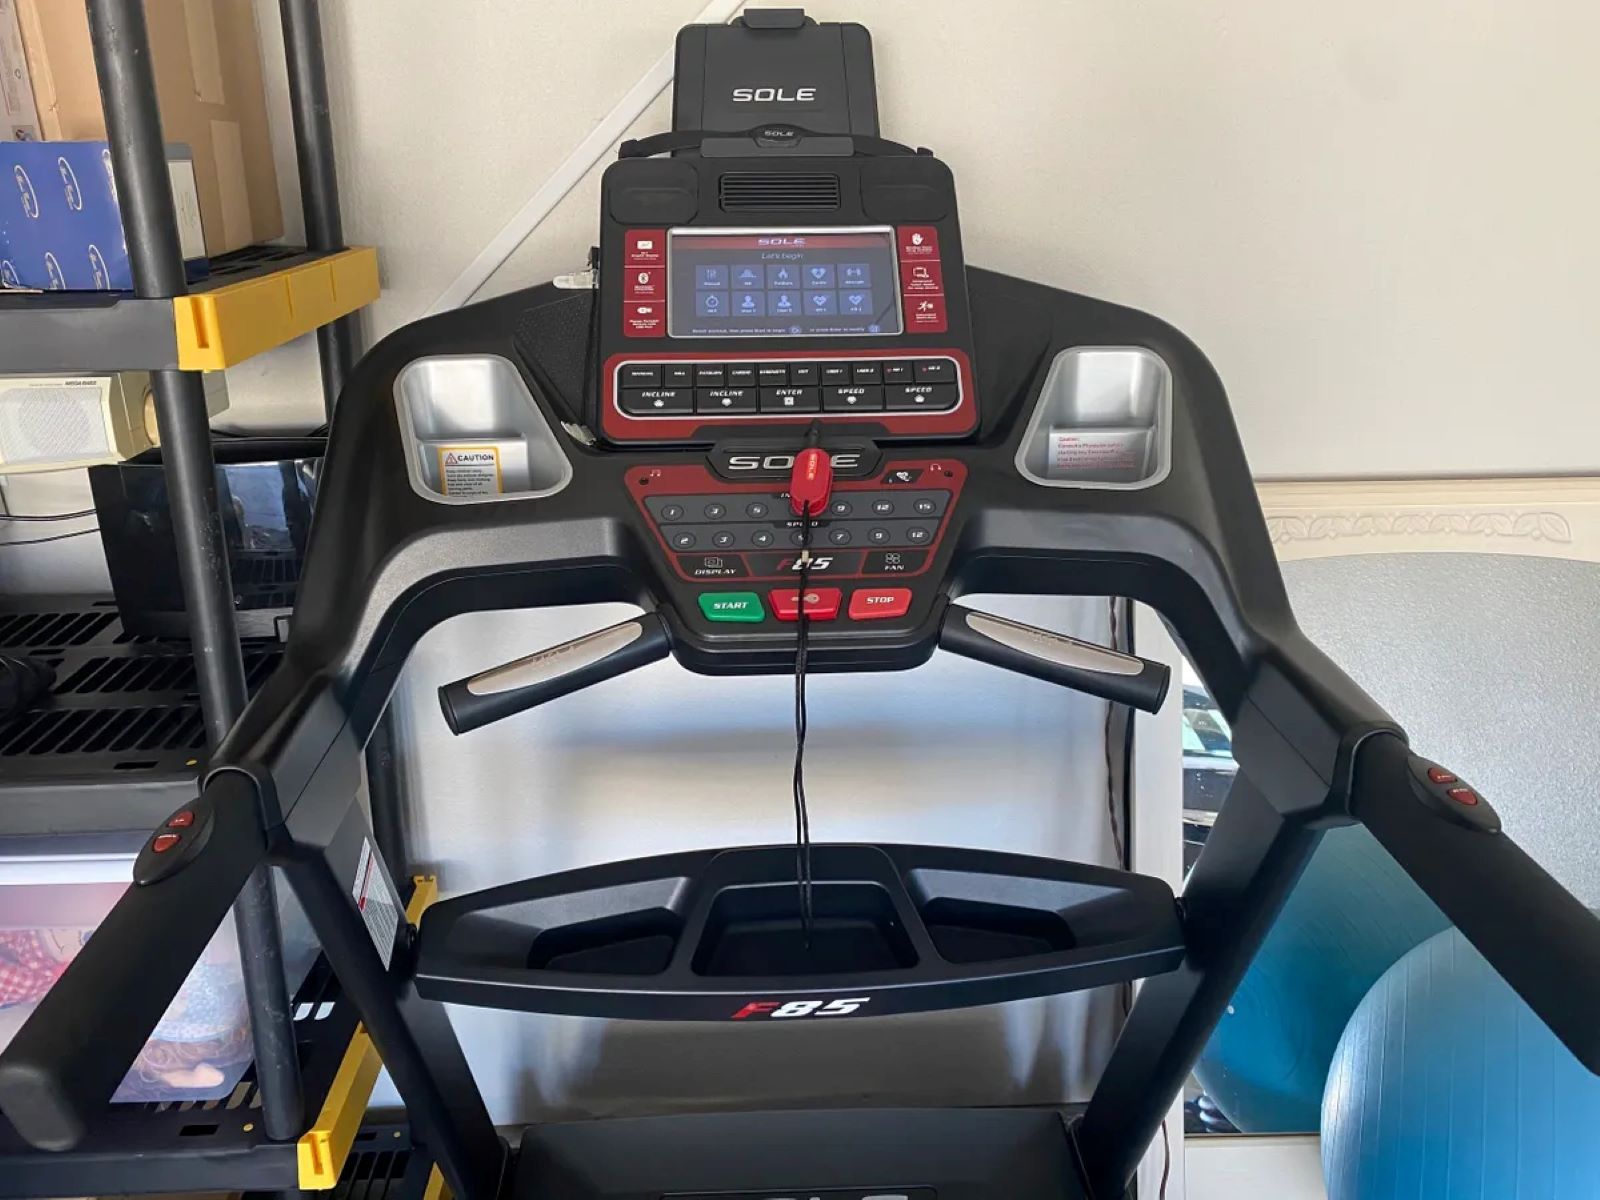 How To Move Sole F80 Treadmill